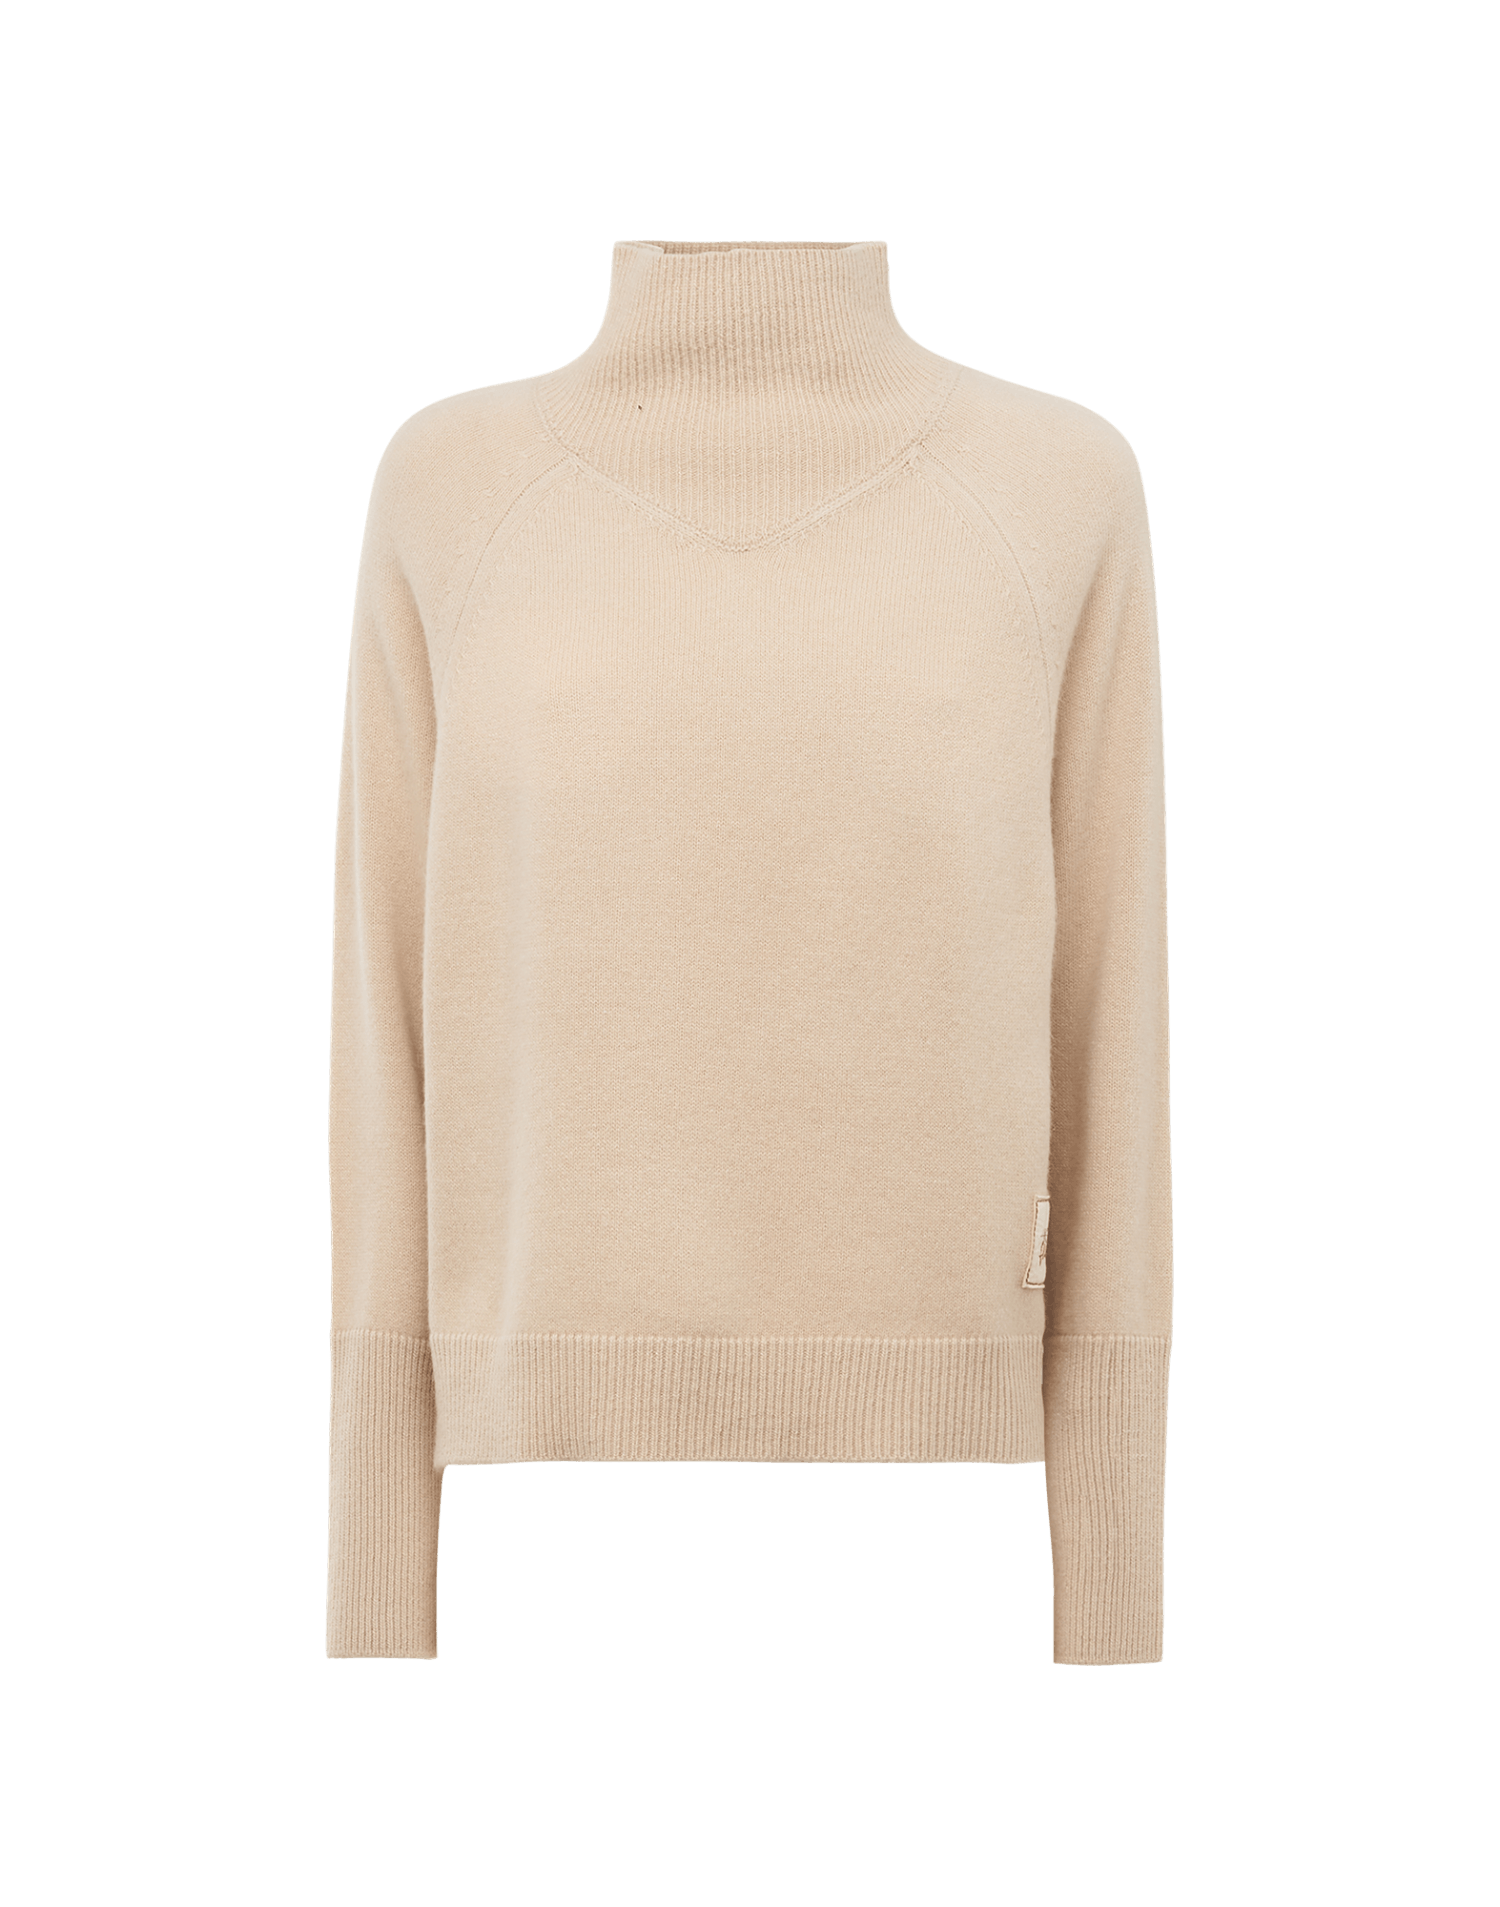 PEACE: Turtleneck sweater with longer back hem